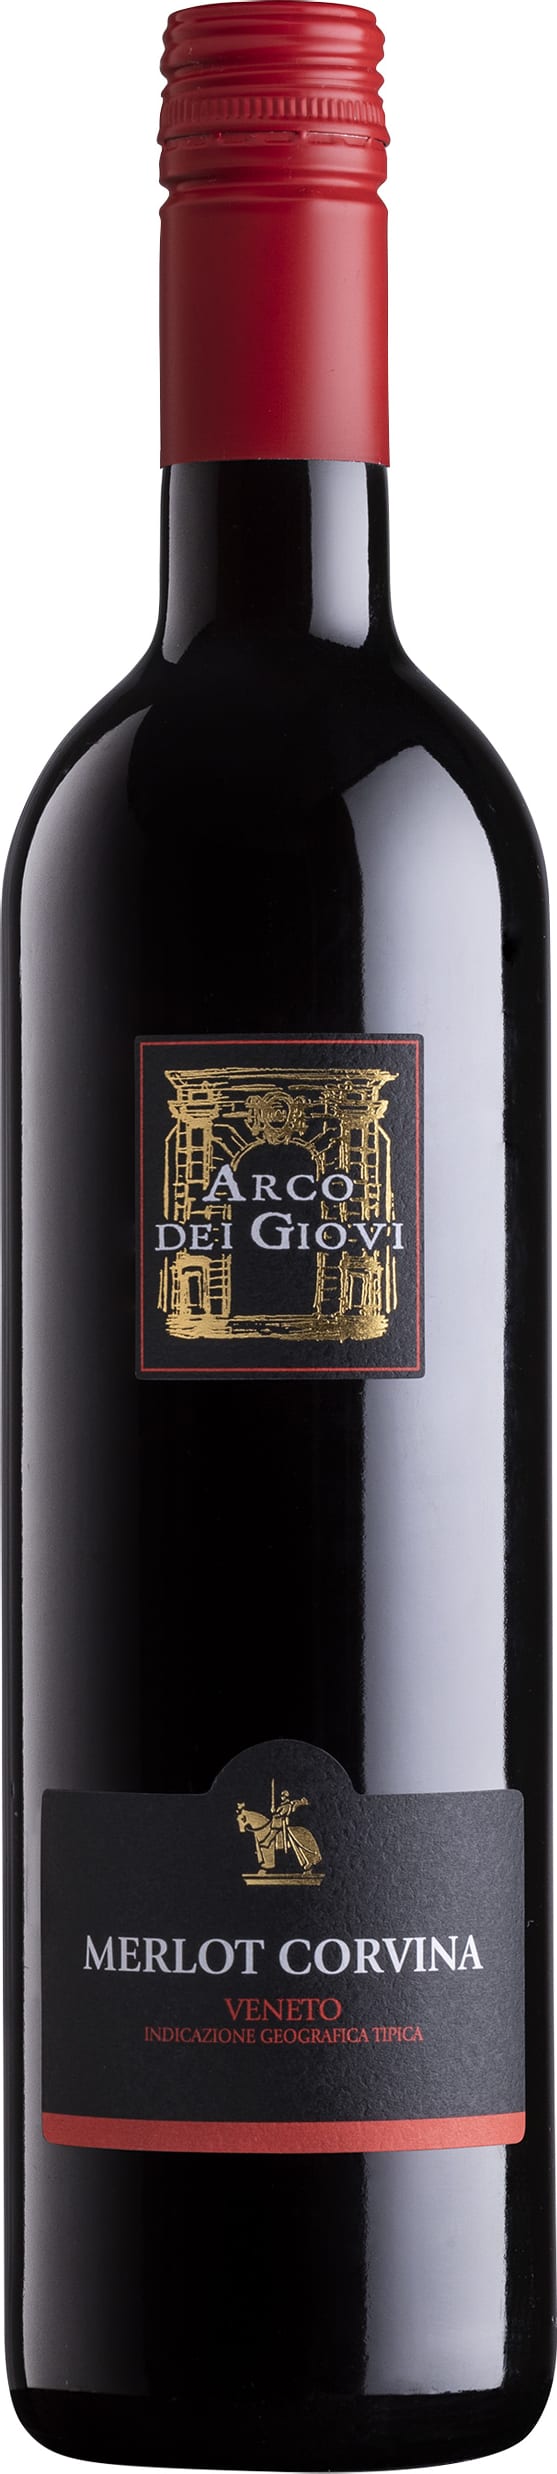 Merlot Corvina IGT 22 Arco dei Giovi 6x75cl - Just Wines 